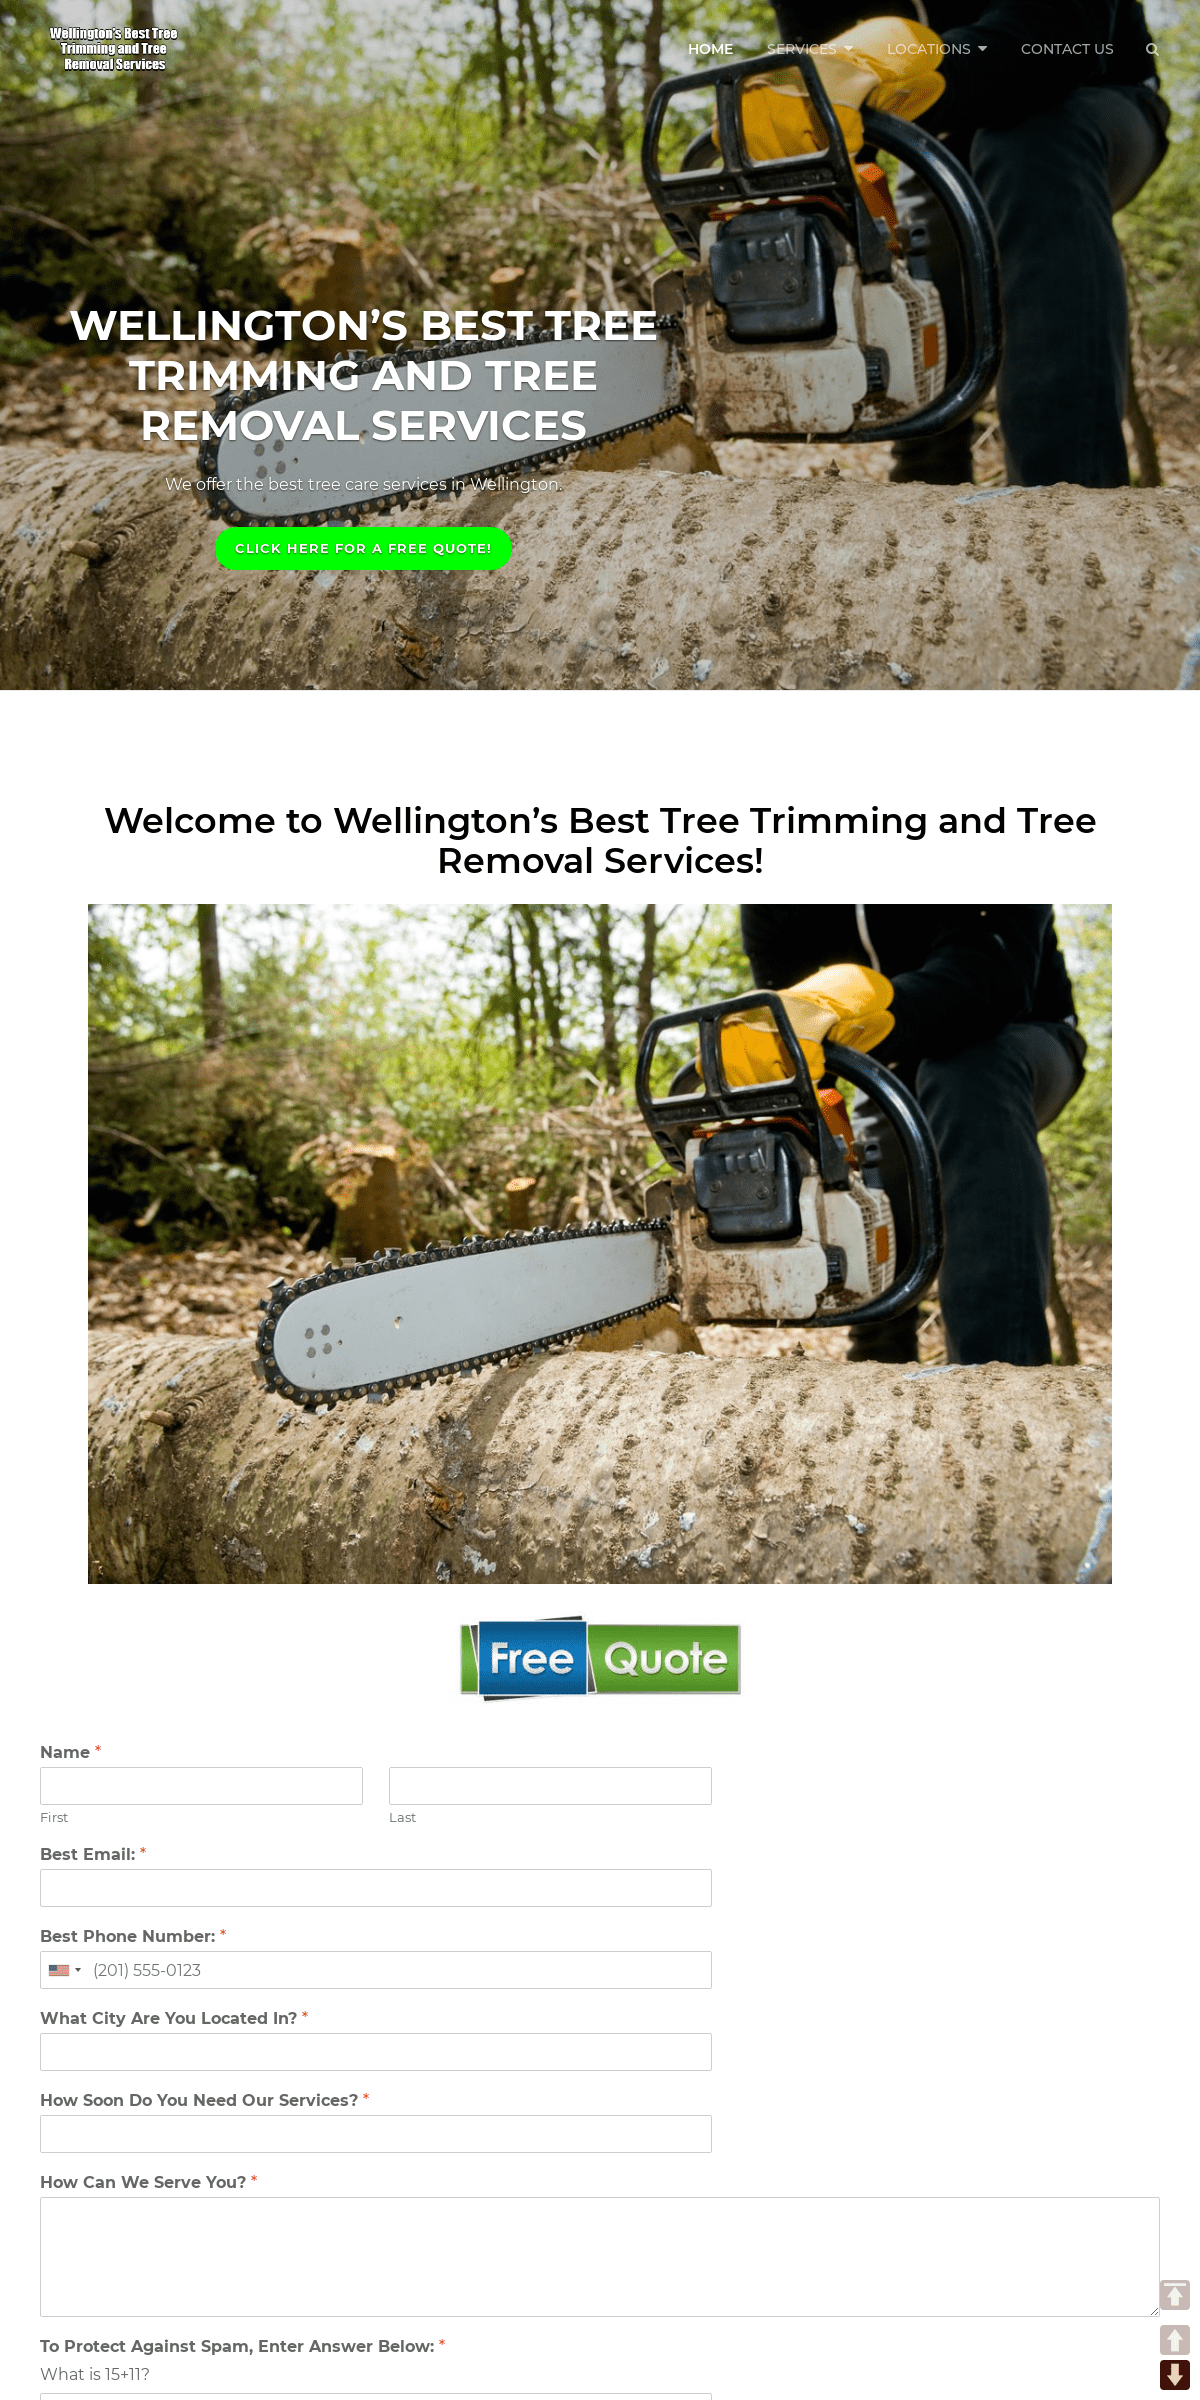 A complete backup of wellingtontreeservice.com